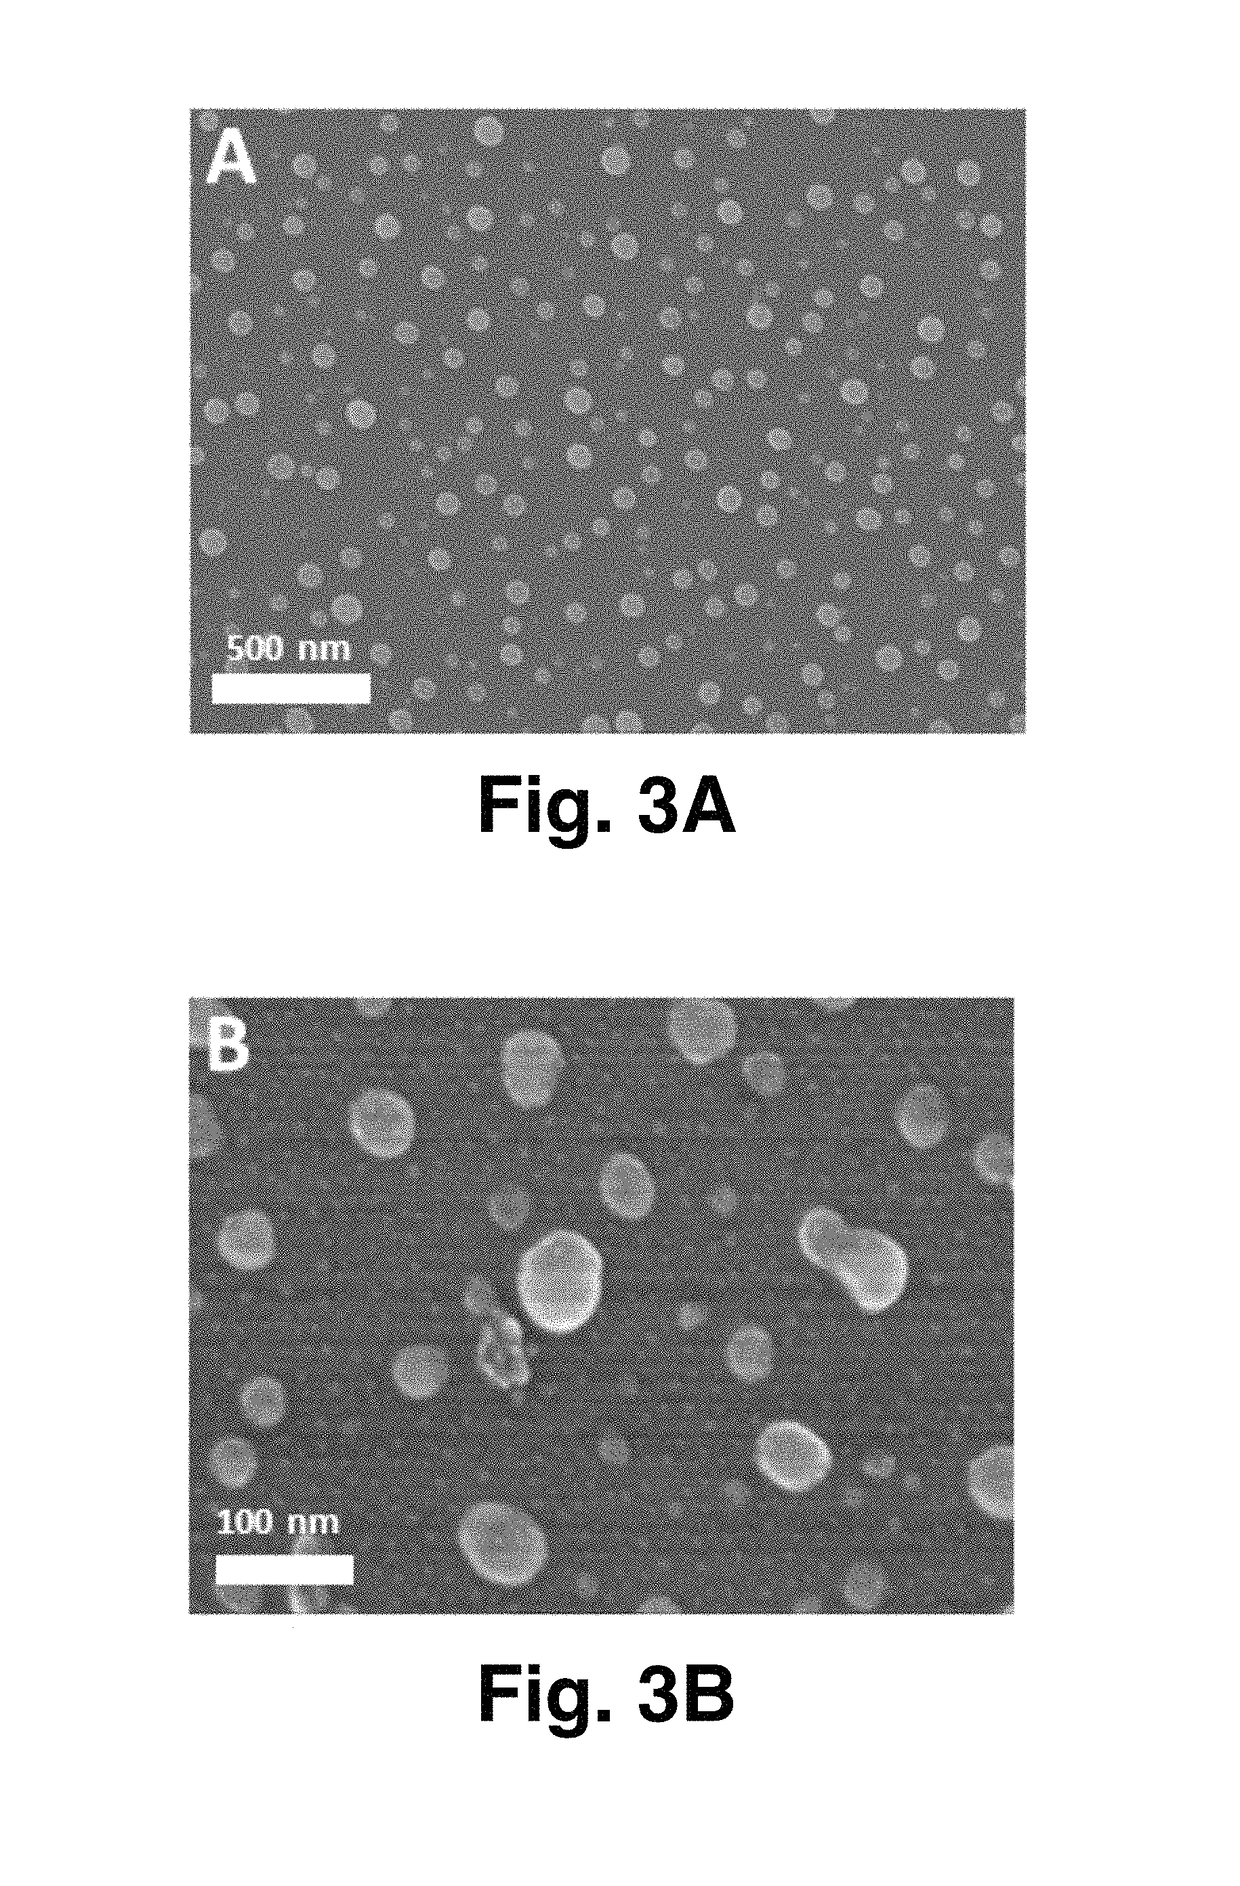 Antibacterial activity of silver-graphene quantum dots nanocomposites against gram-positive and gram-negative bacteria